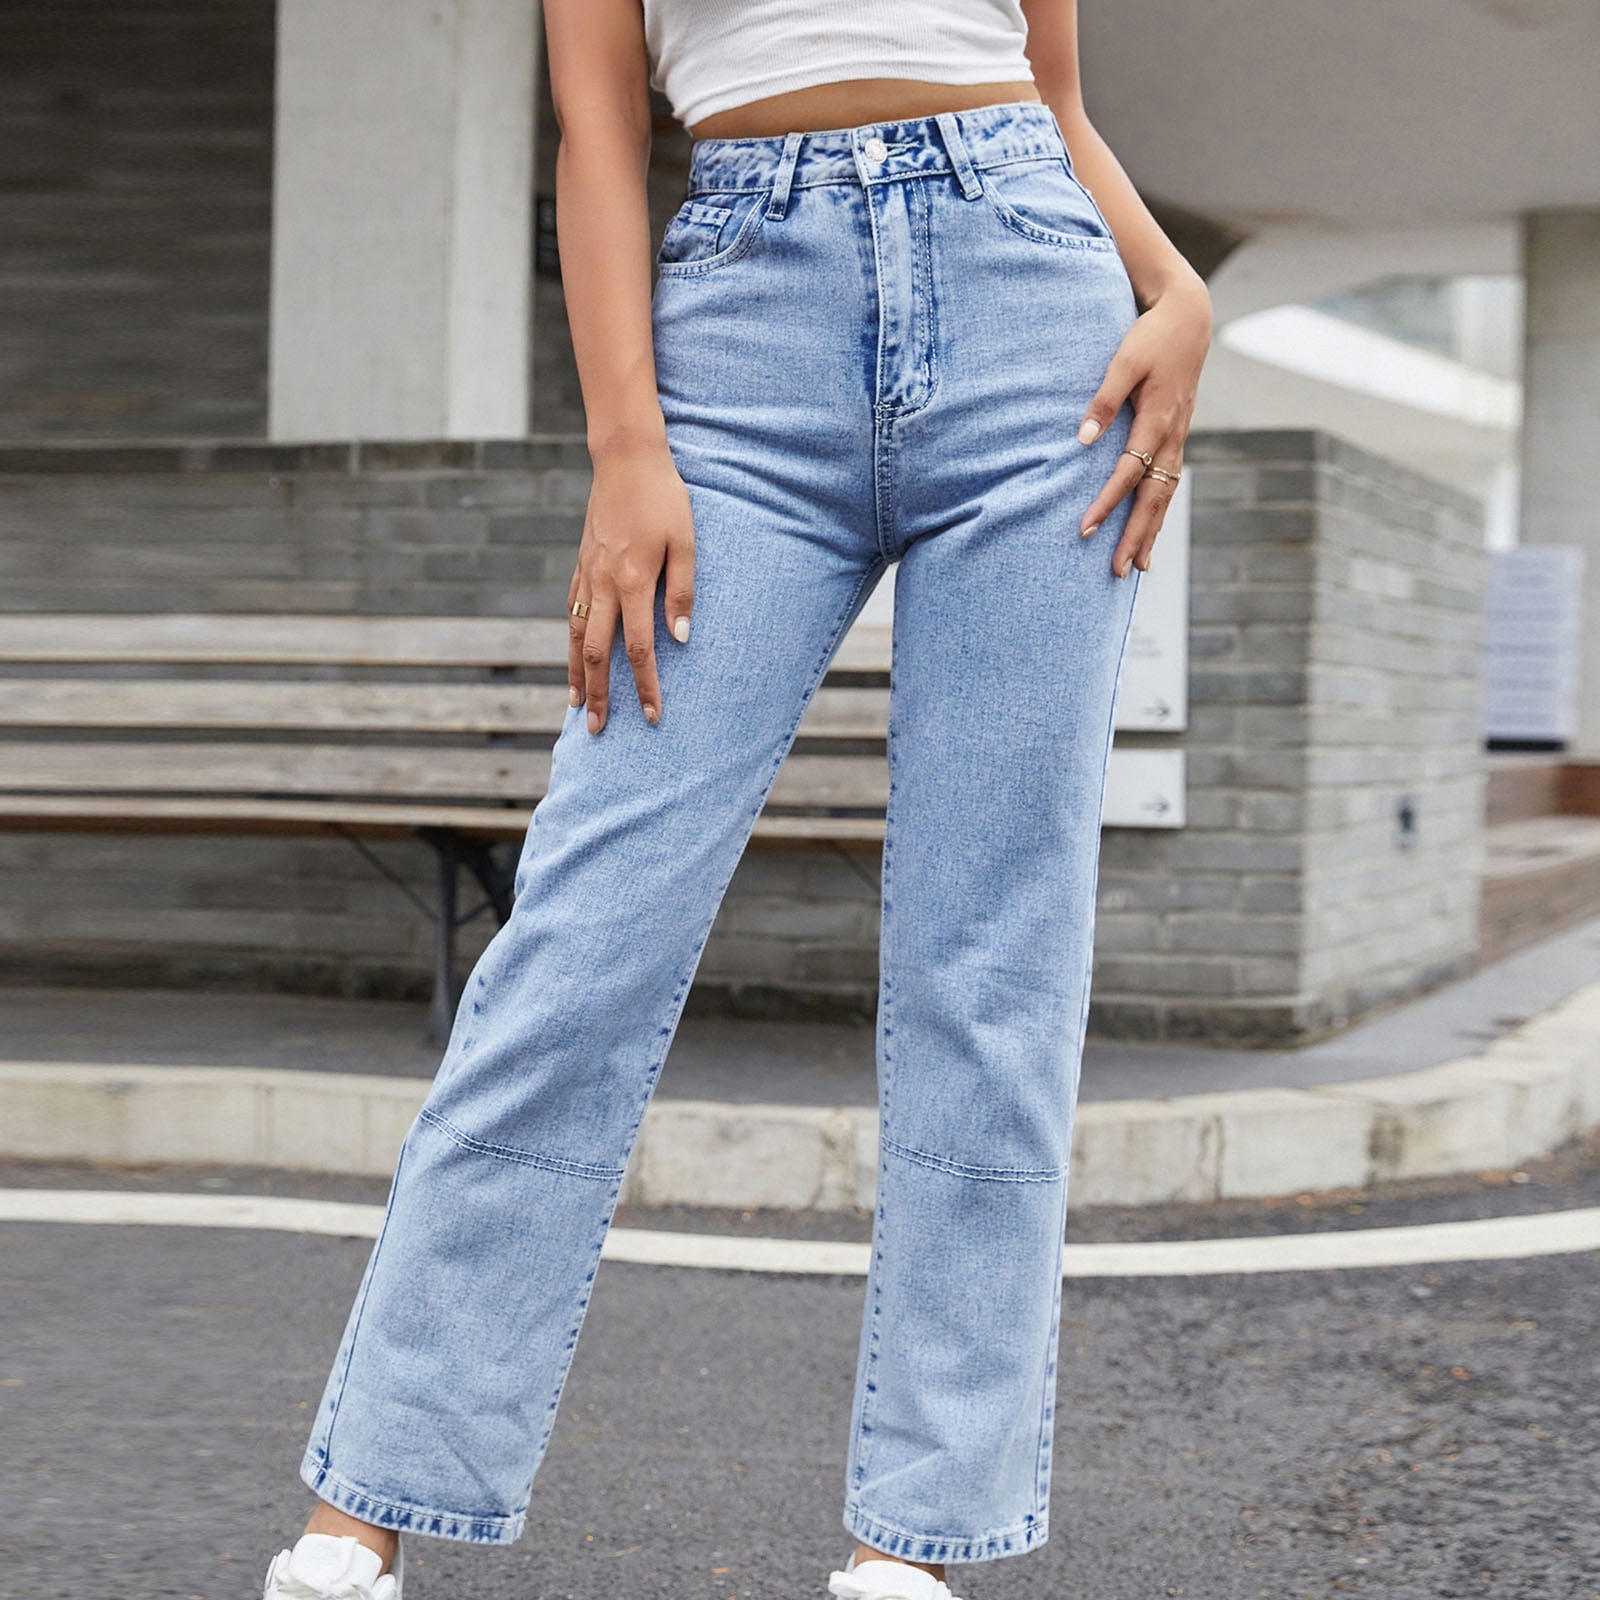 JIAHENG MUMU Women Oversize Stretchy Jeans High Waist Plus Size